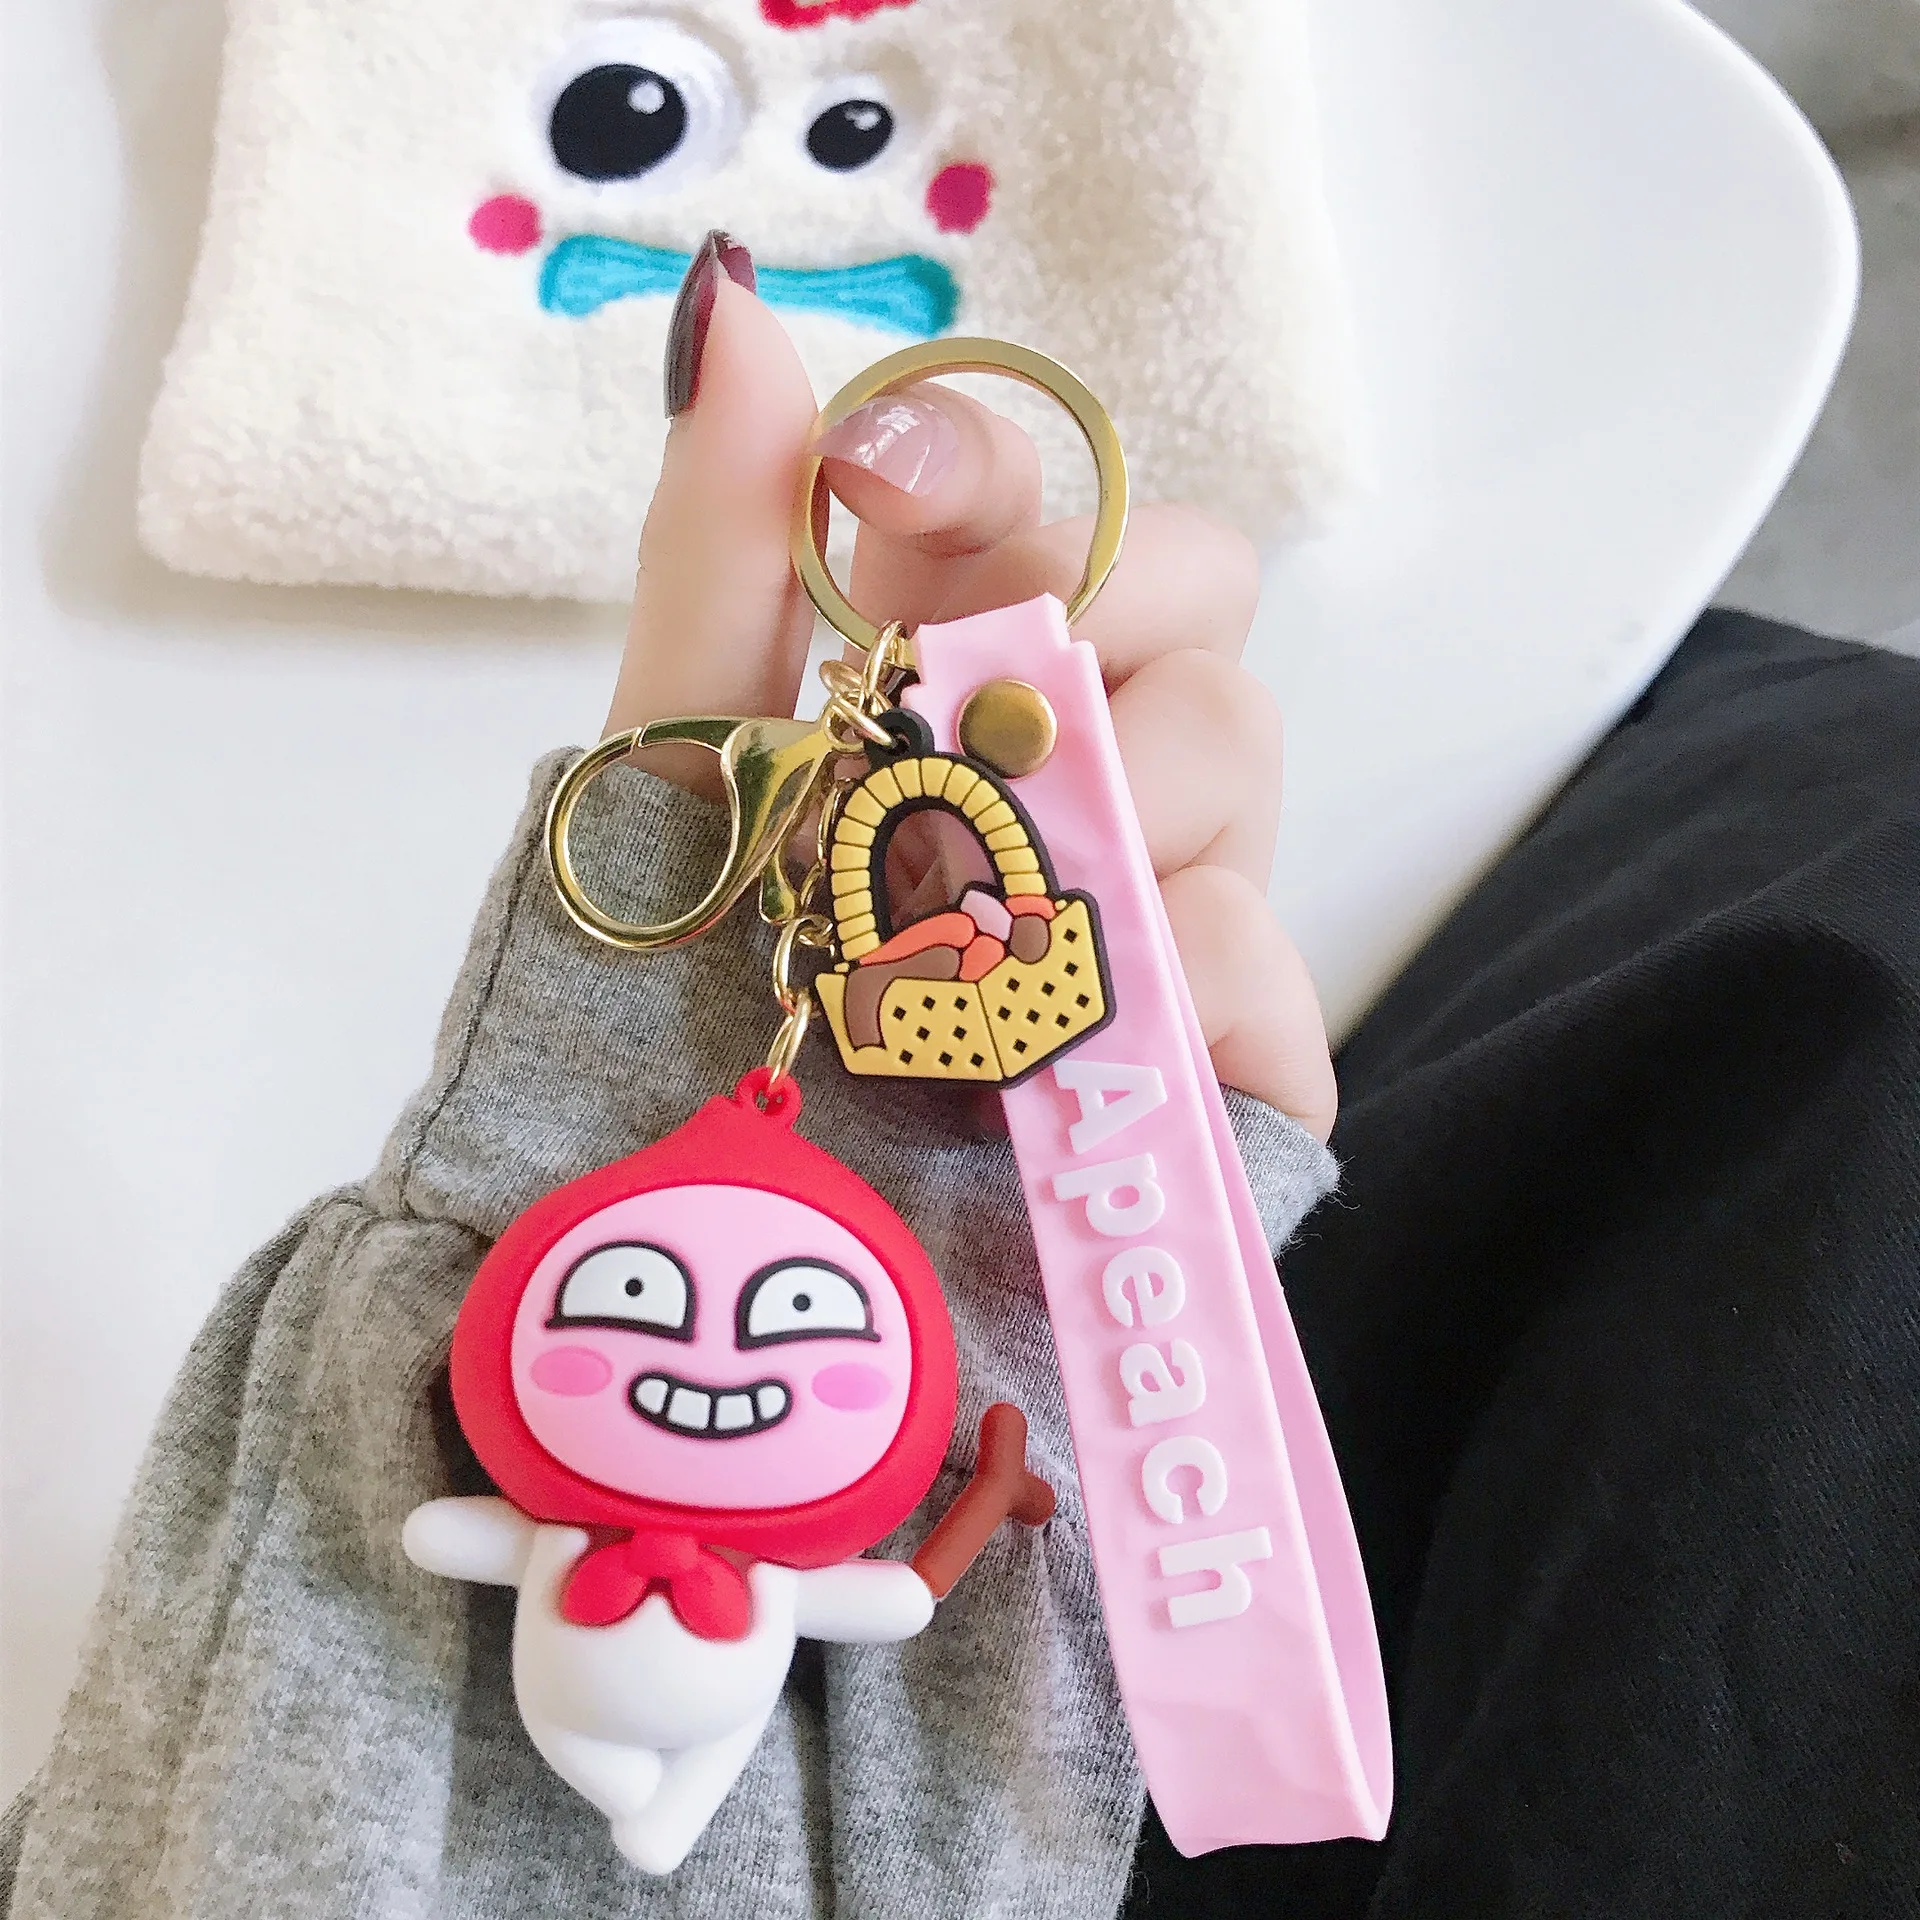 Cute Cartoon Kakao Action Figures Keychains Creative Rubber Key Chain ...